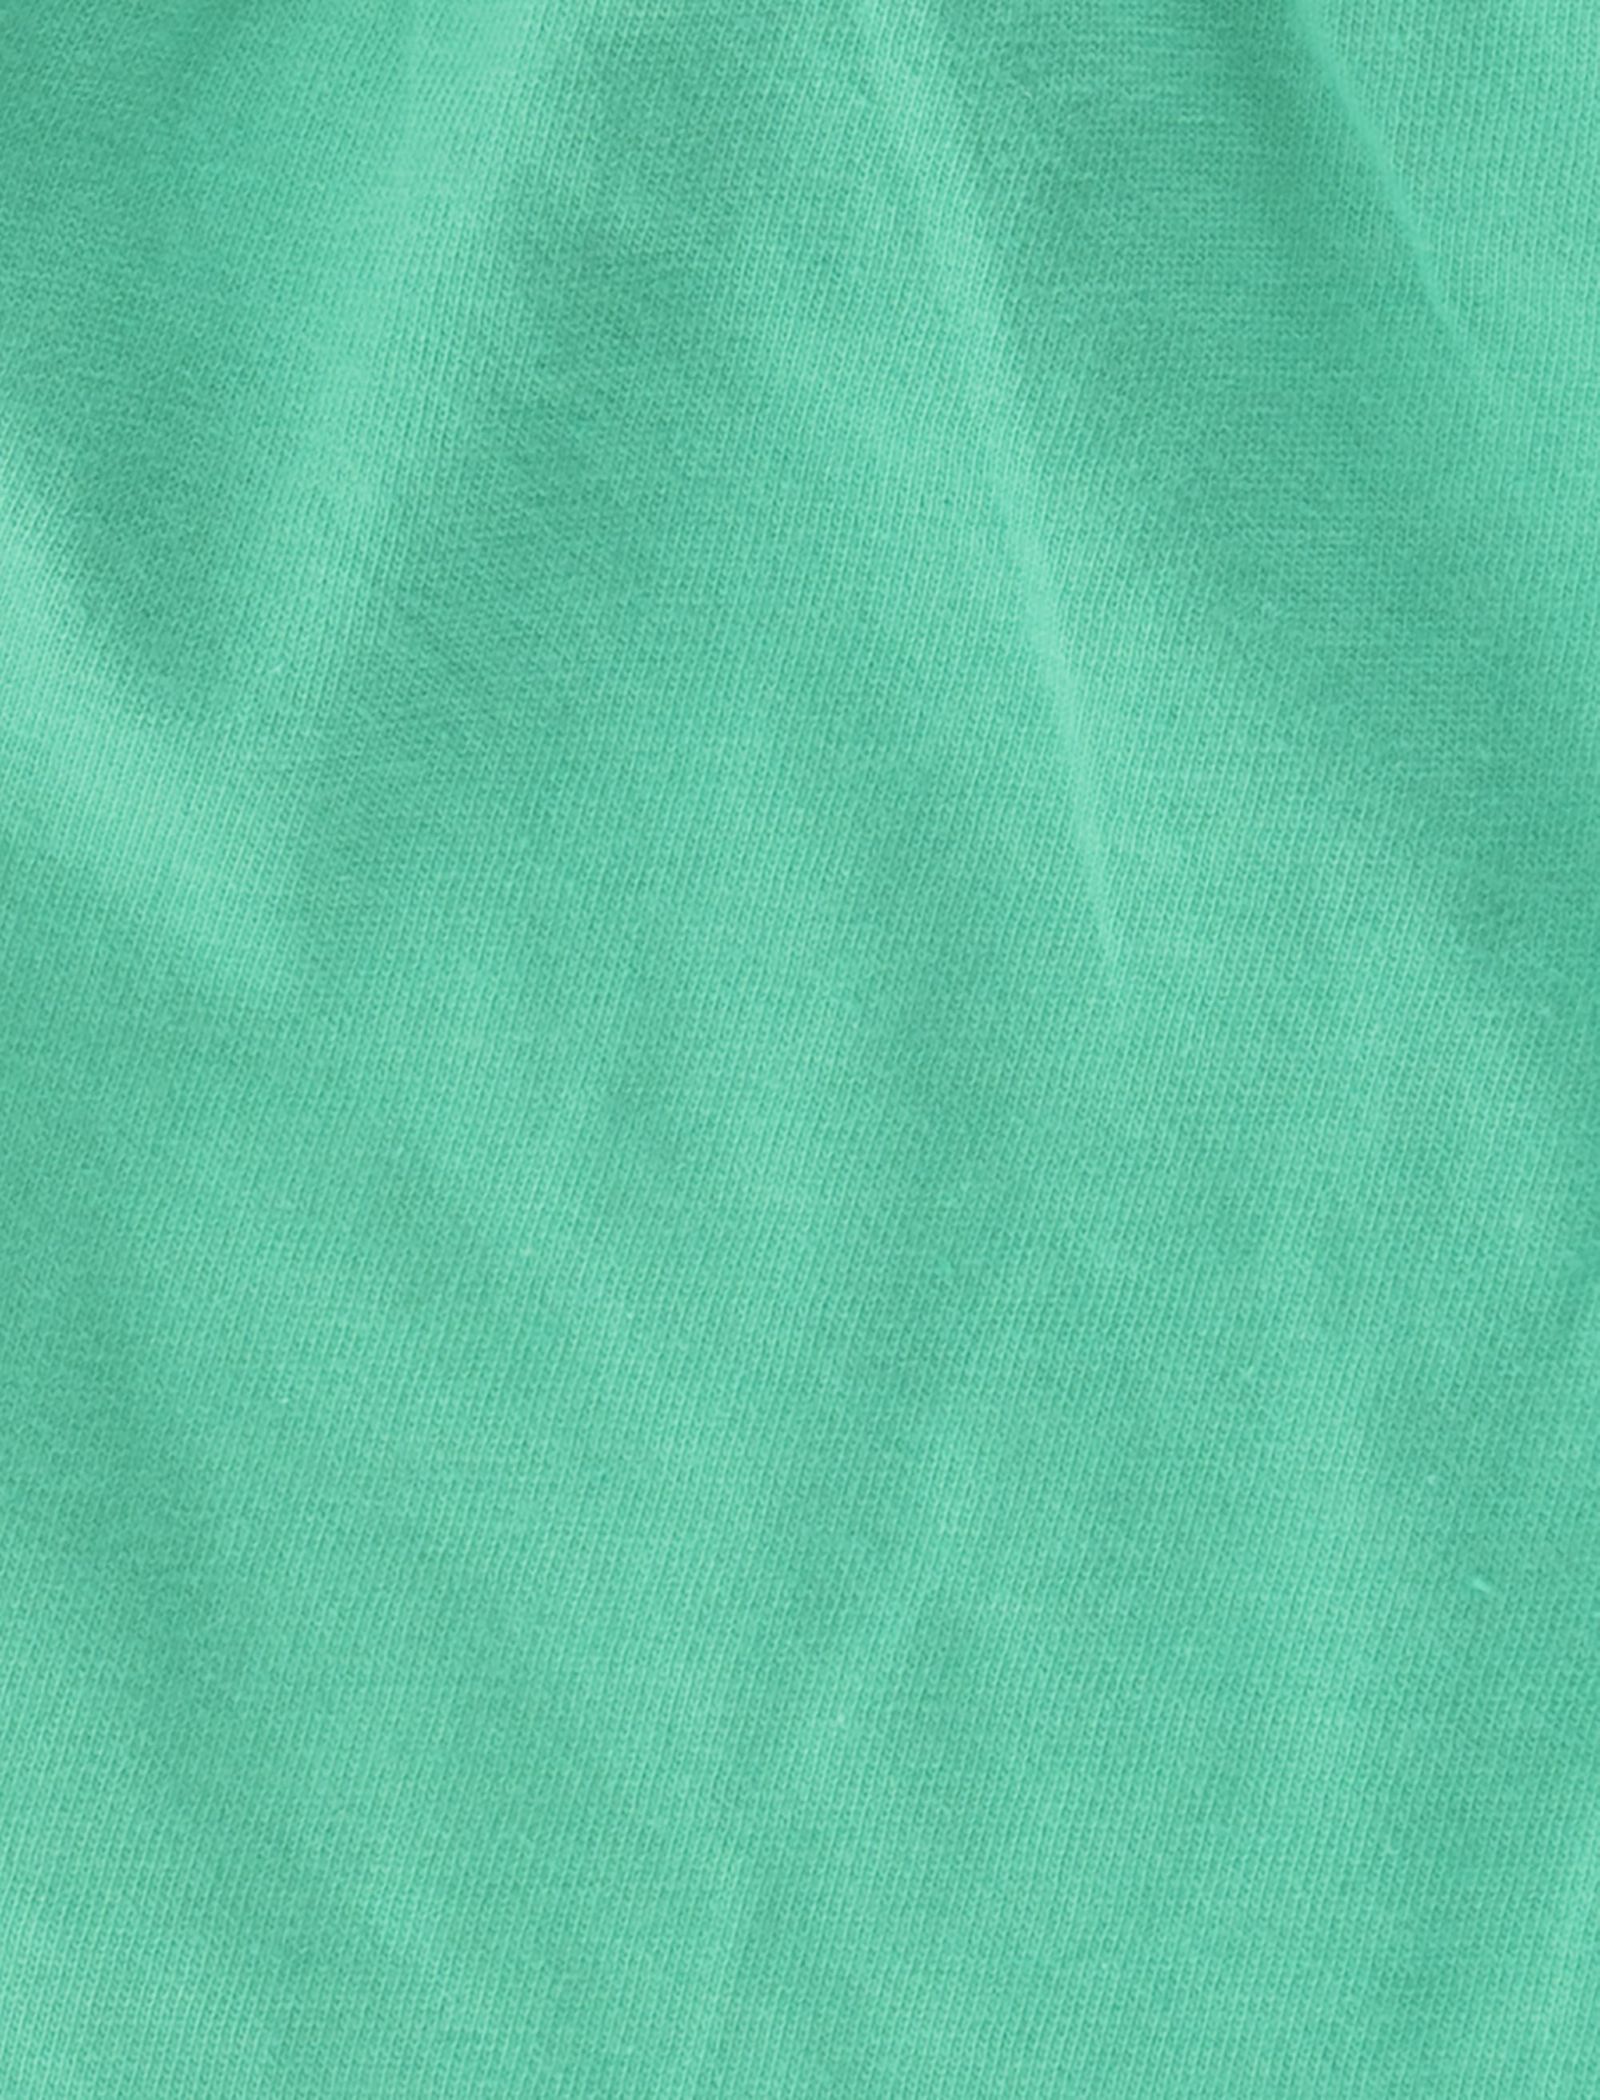 تی شرت و شلوارک نخی نوزادی بسته 2 عددی - بلوکیدز - سفيد/سبز - 4